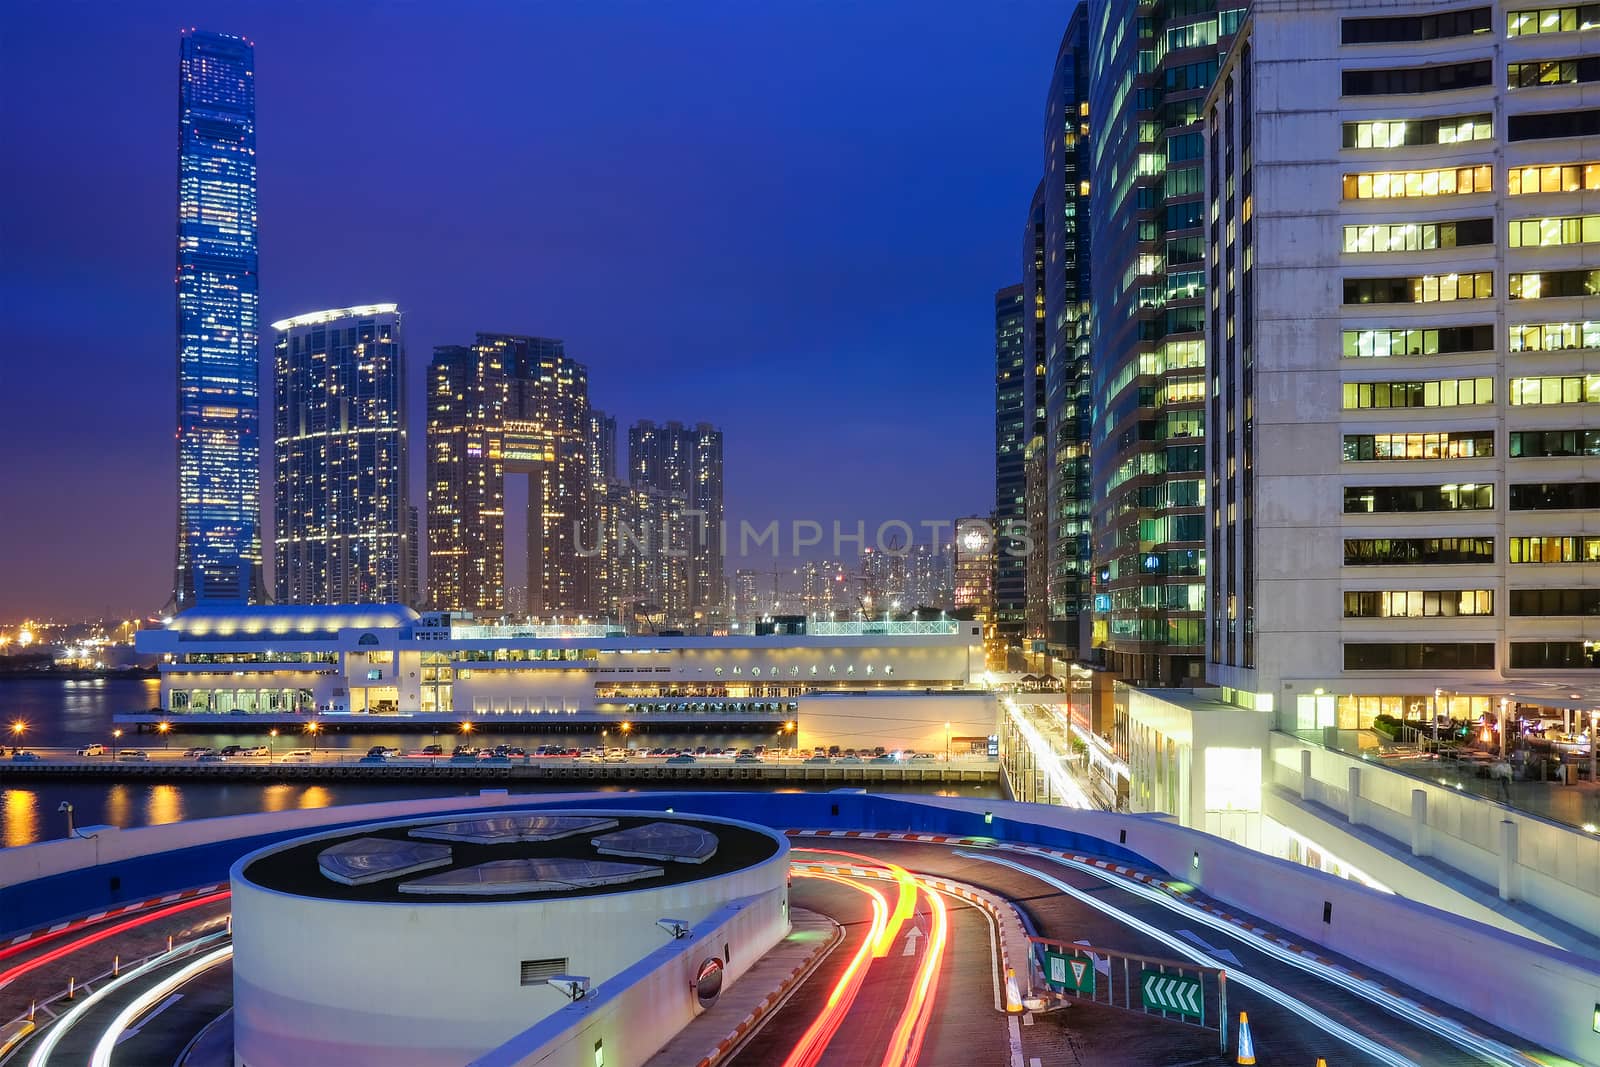 Night view traffic in Hong Kong at twiligth time by Surasak